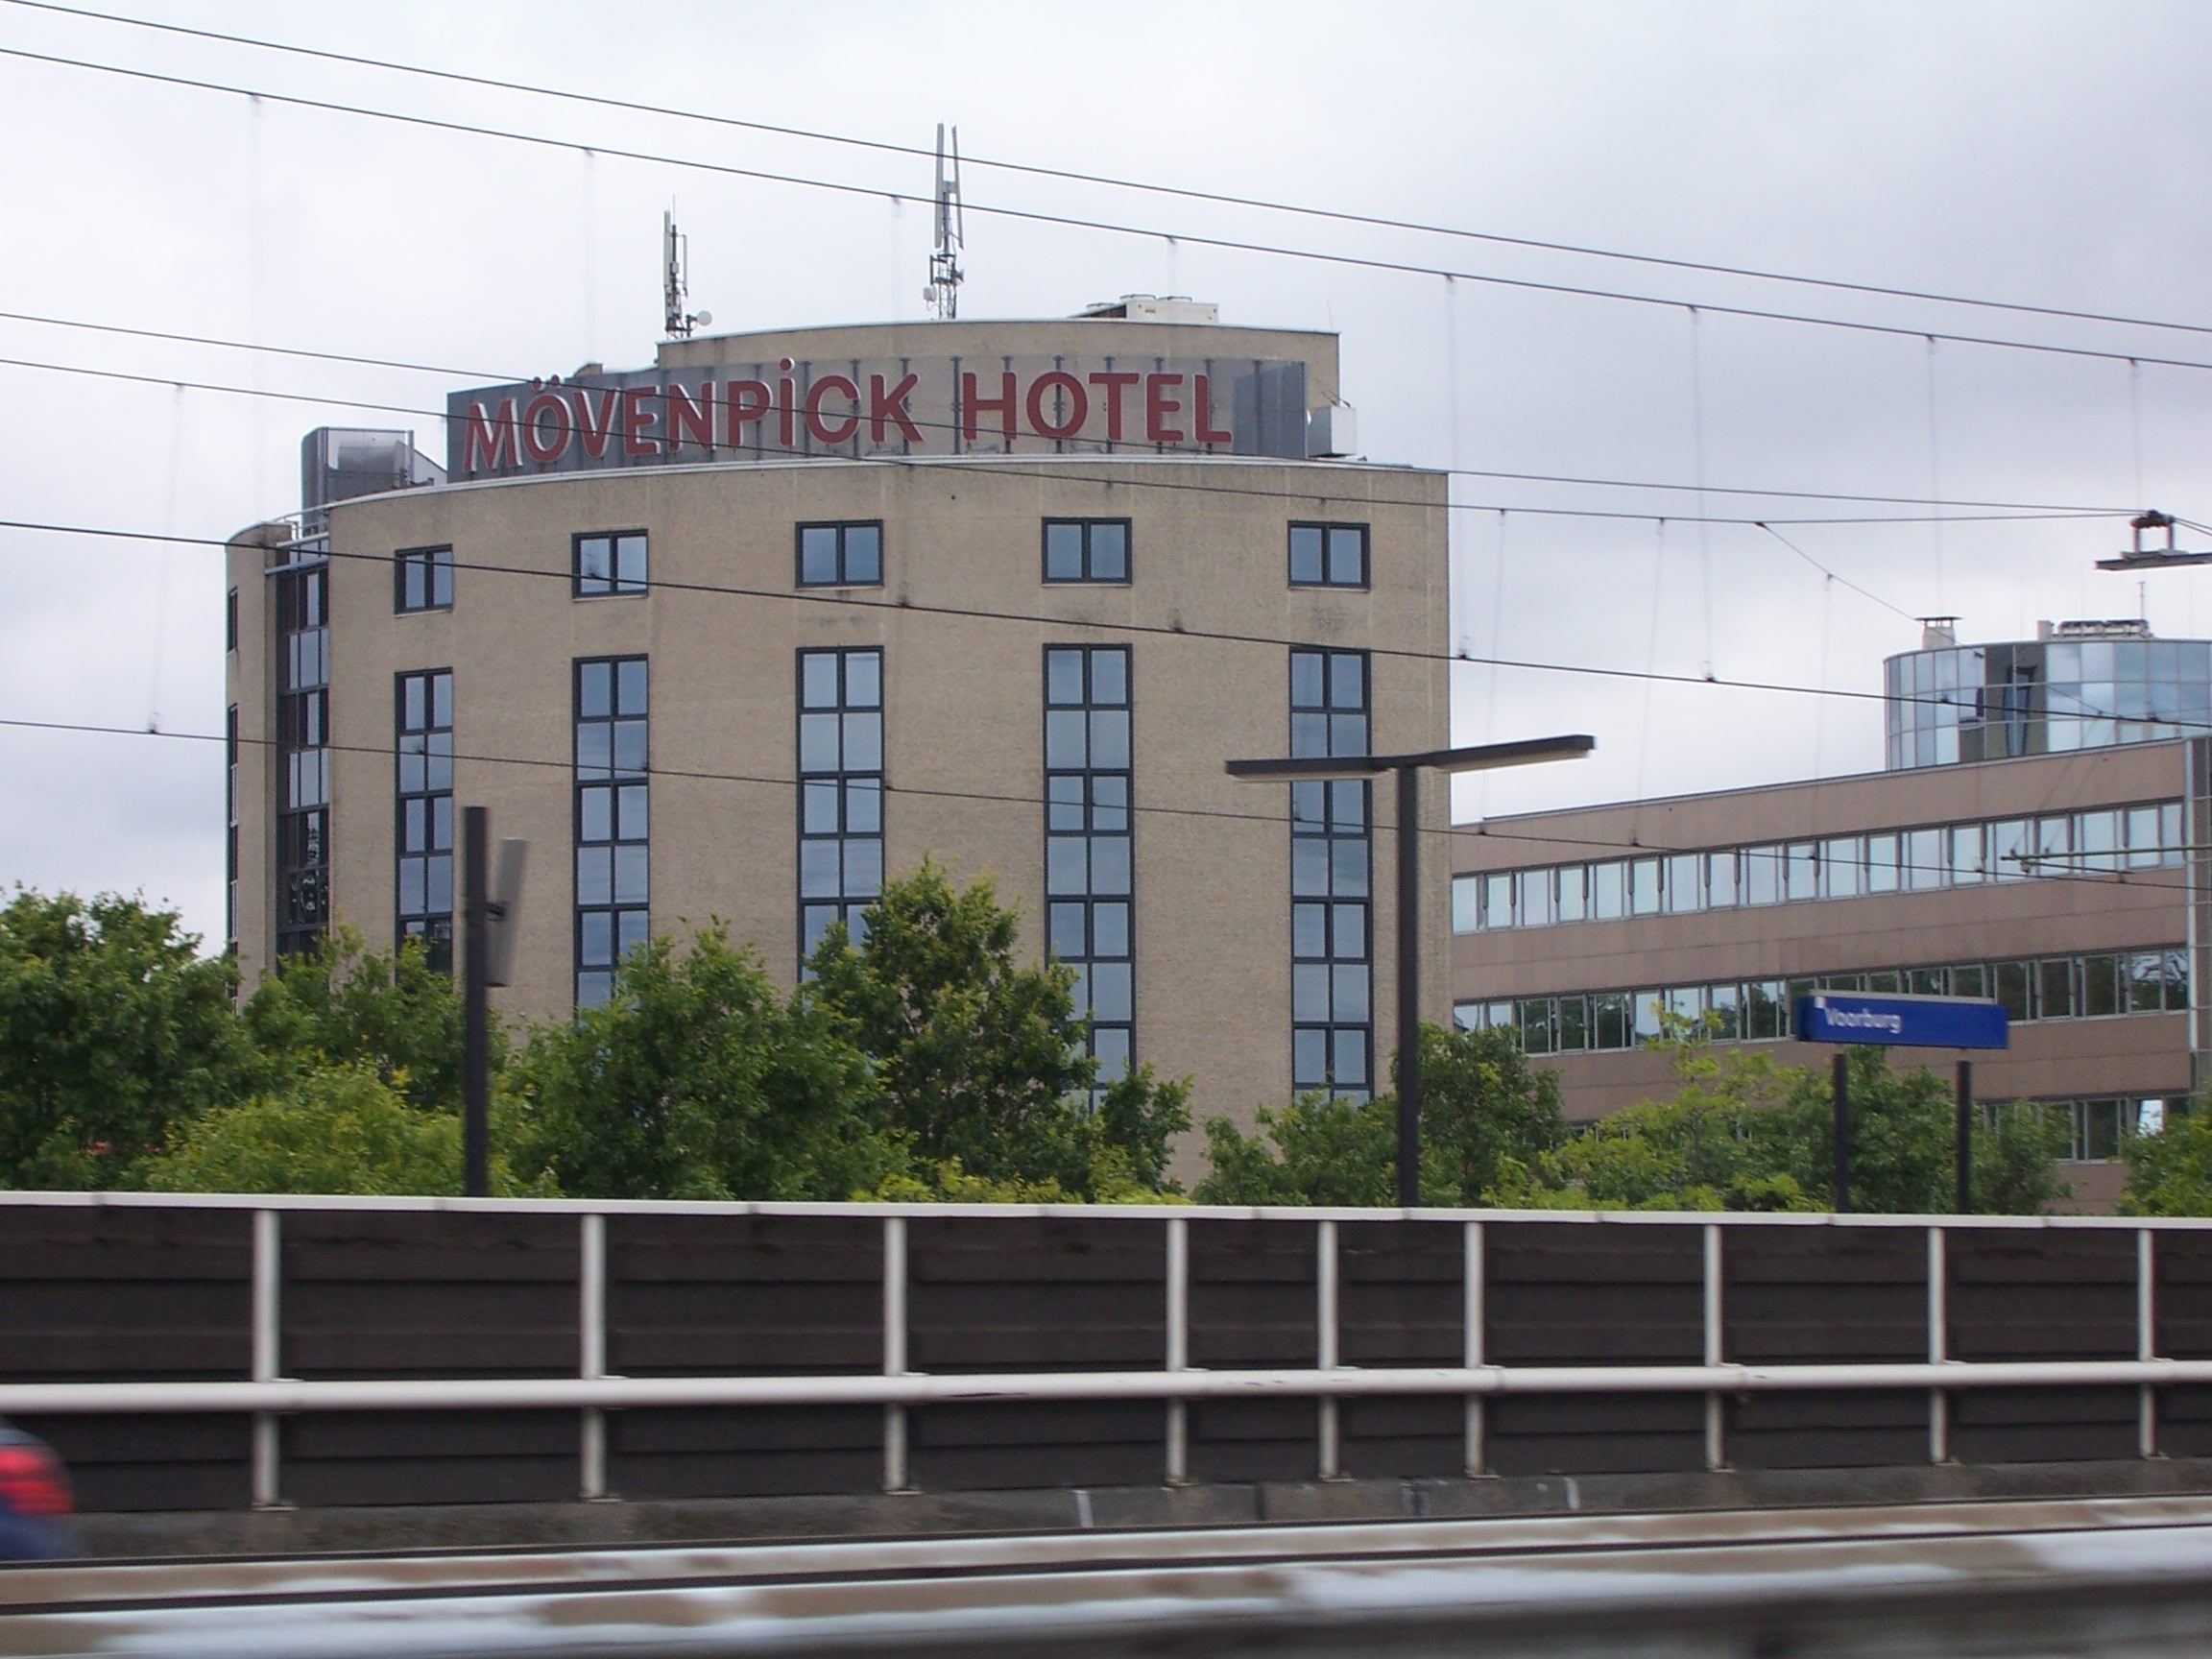 Movenpick Hotel